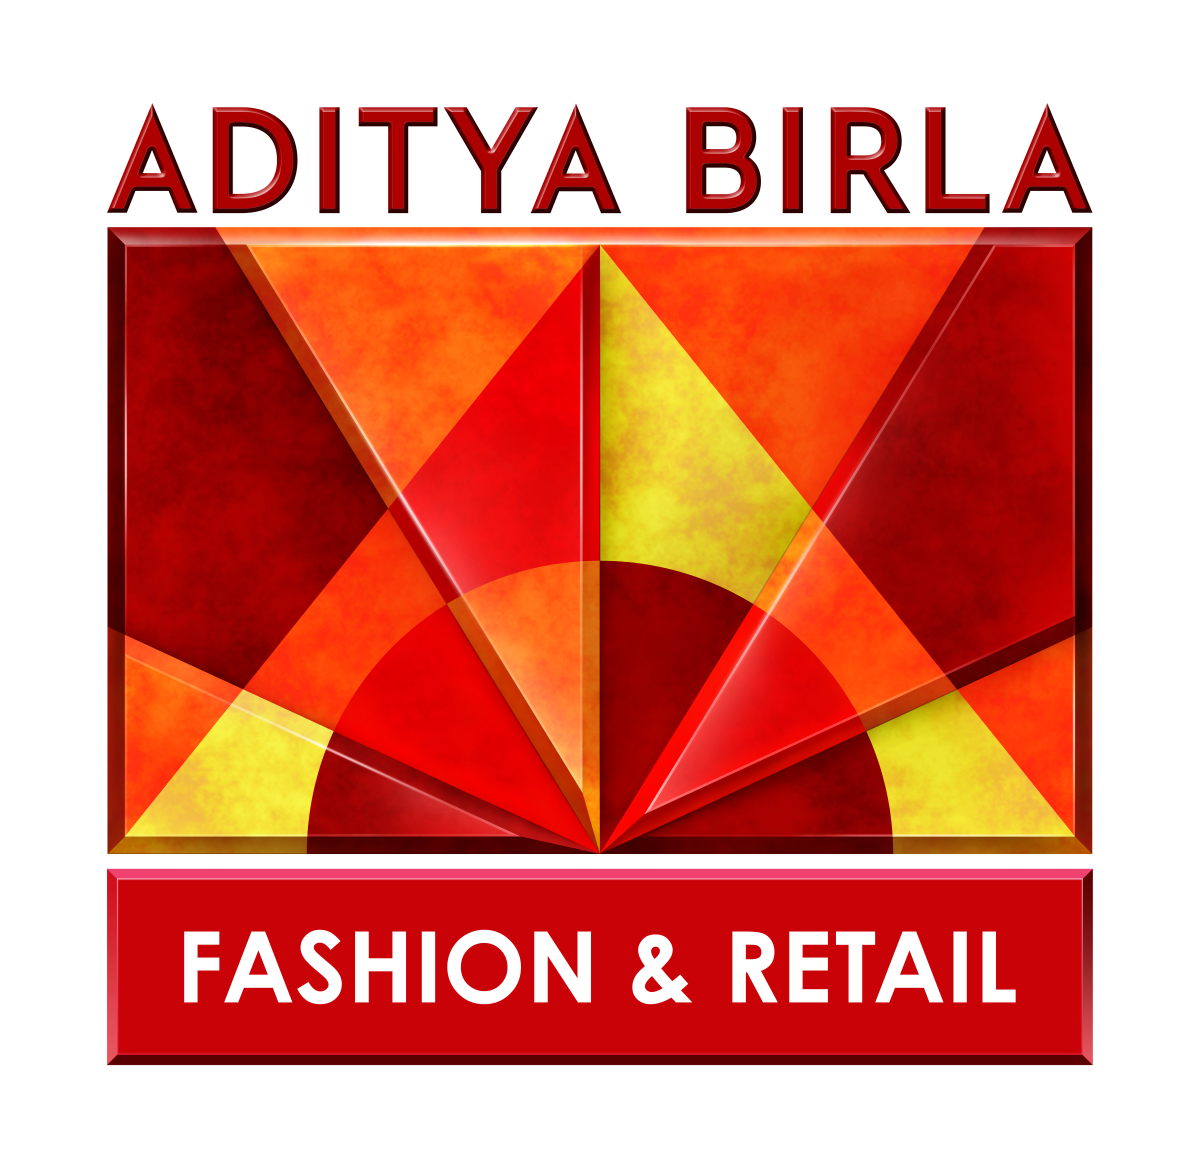 Aditya Birla Fashion and Retail to open Galeries Lafayette stores in India